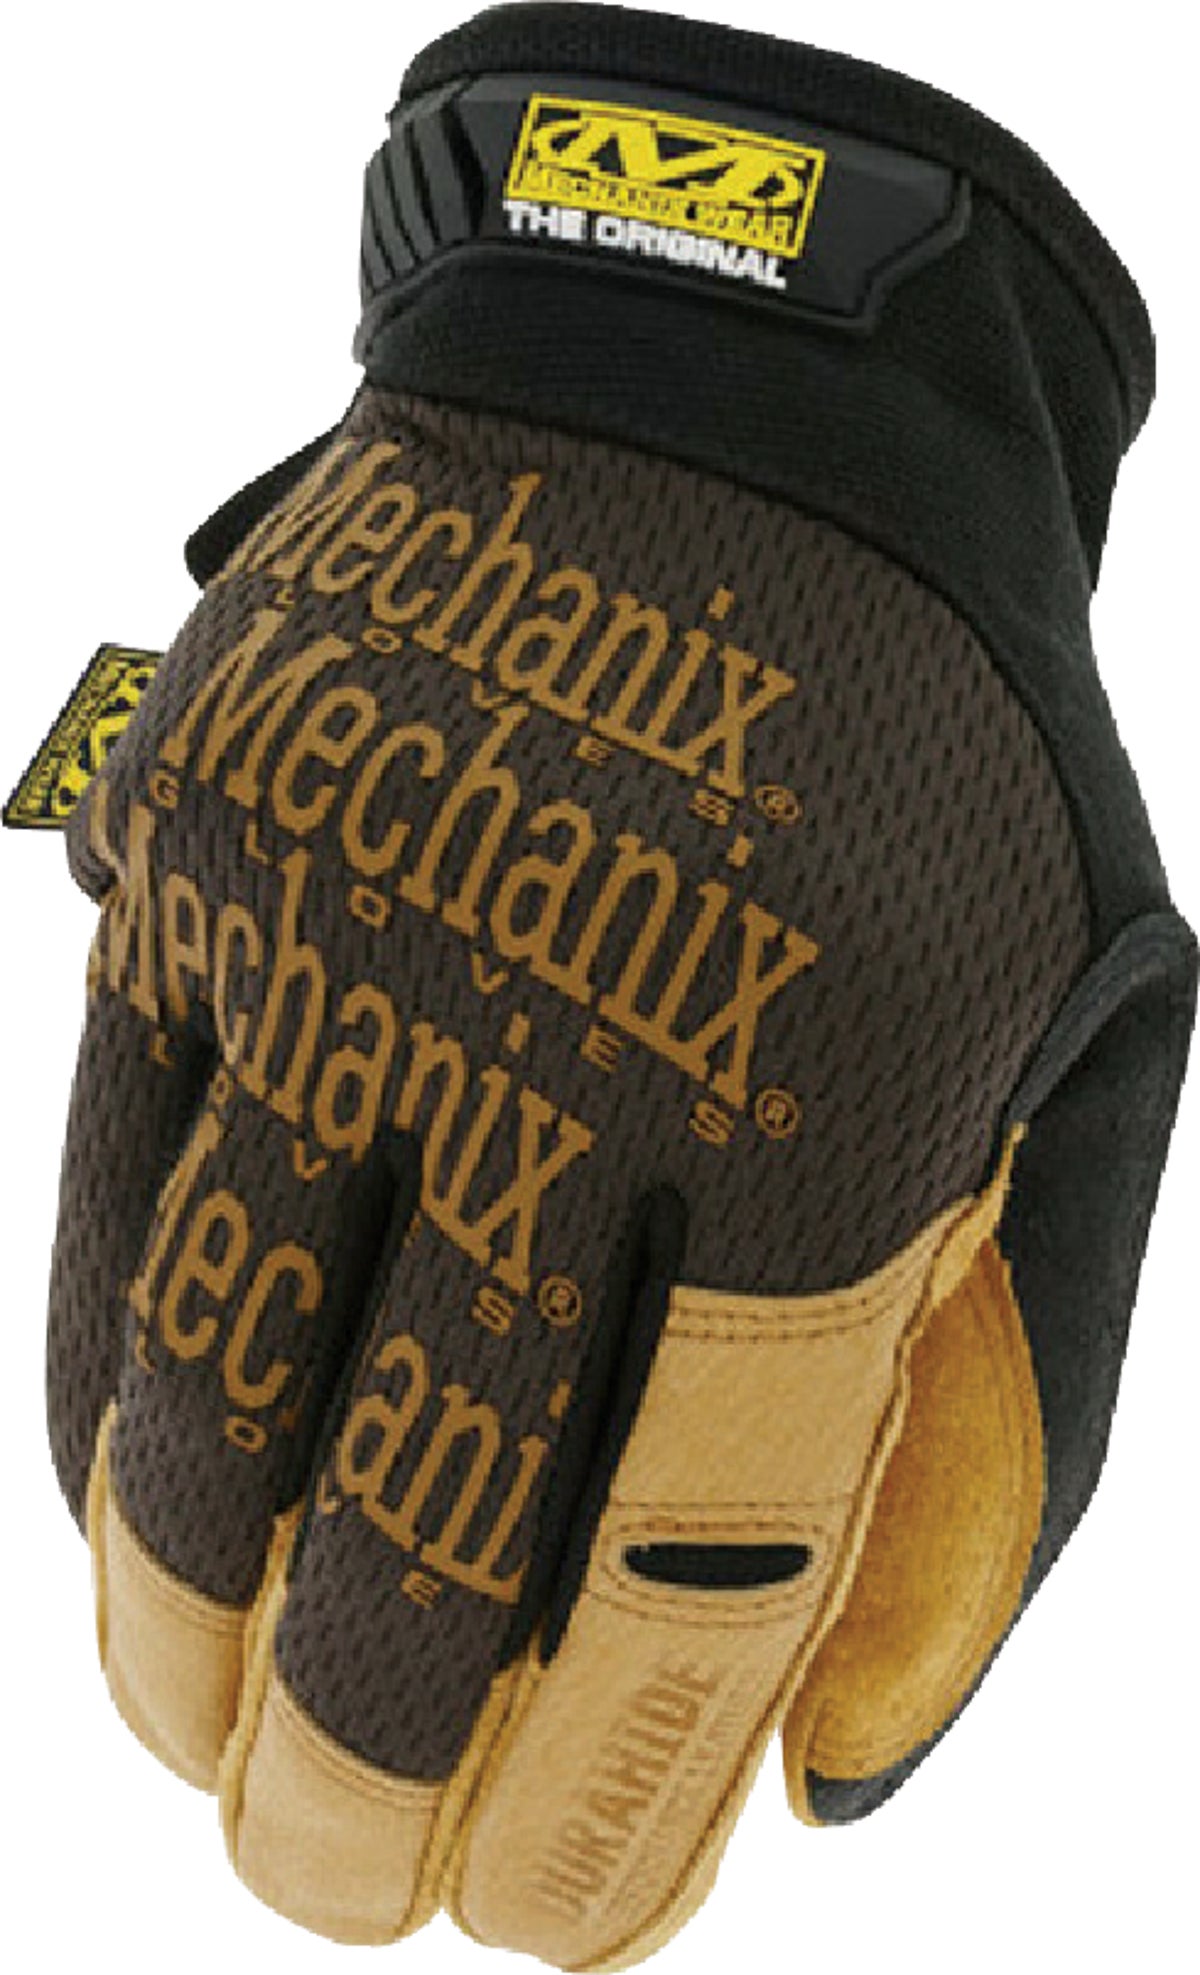 Mechanix Wear Specialty Grip Men's XL Black Polyester Work Glove